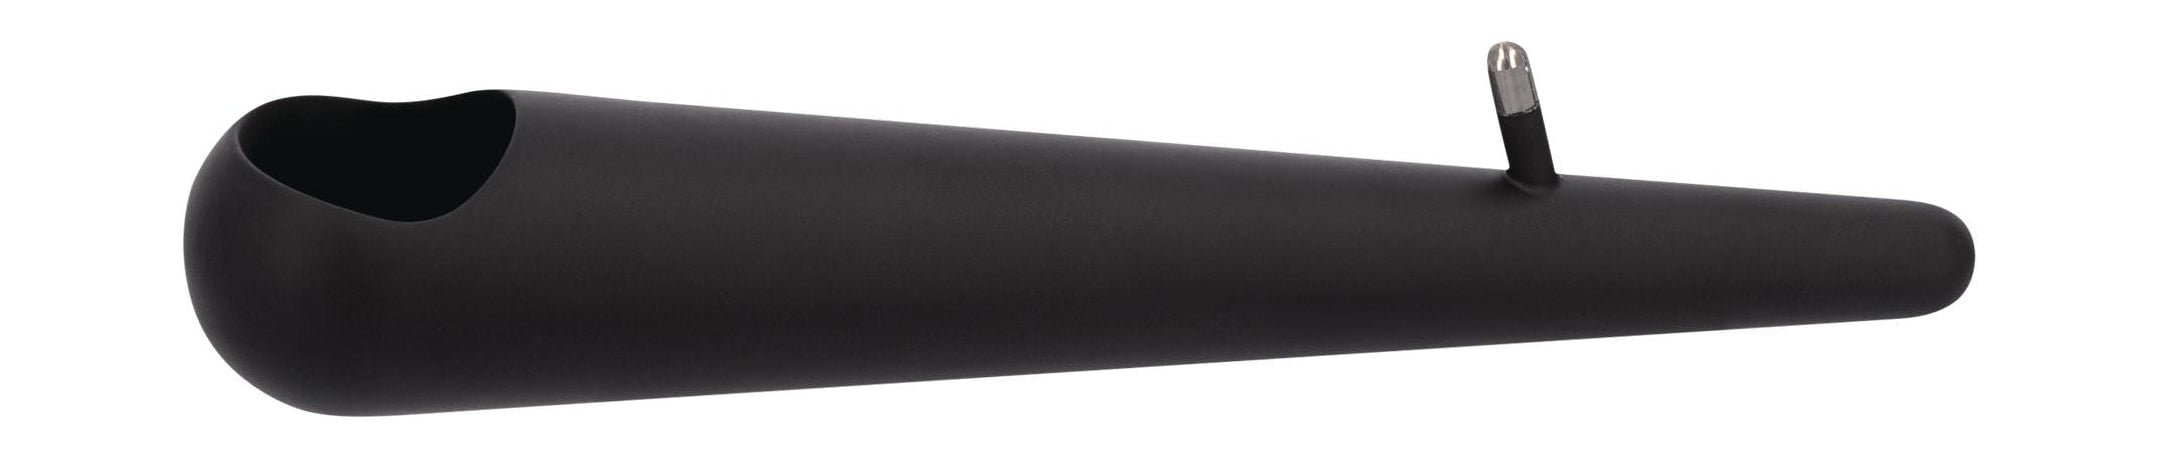 Uyuni Lighting Bonfire -kandelaar 1'arm Ø 14,5 cm, Matt Black